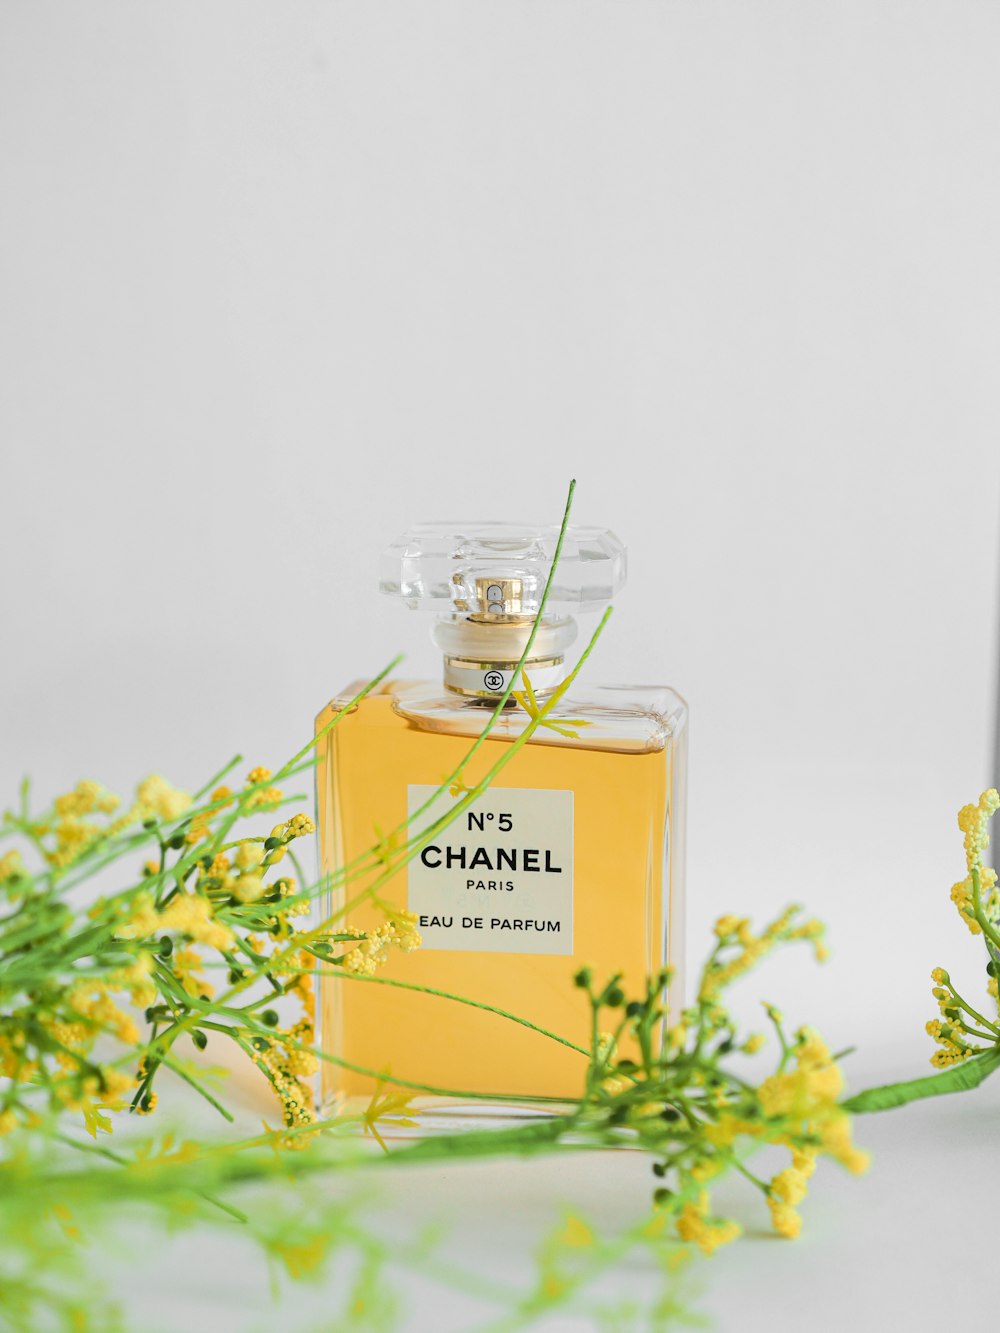 Foto Nº 5 botella de perfume chanel – Imagen París gratis en Unsplash